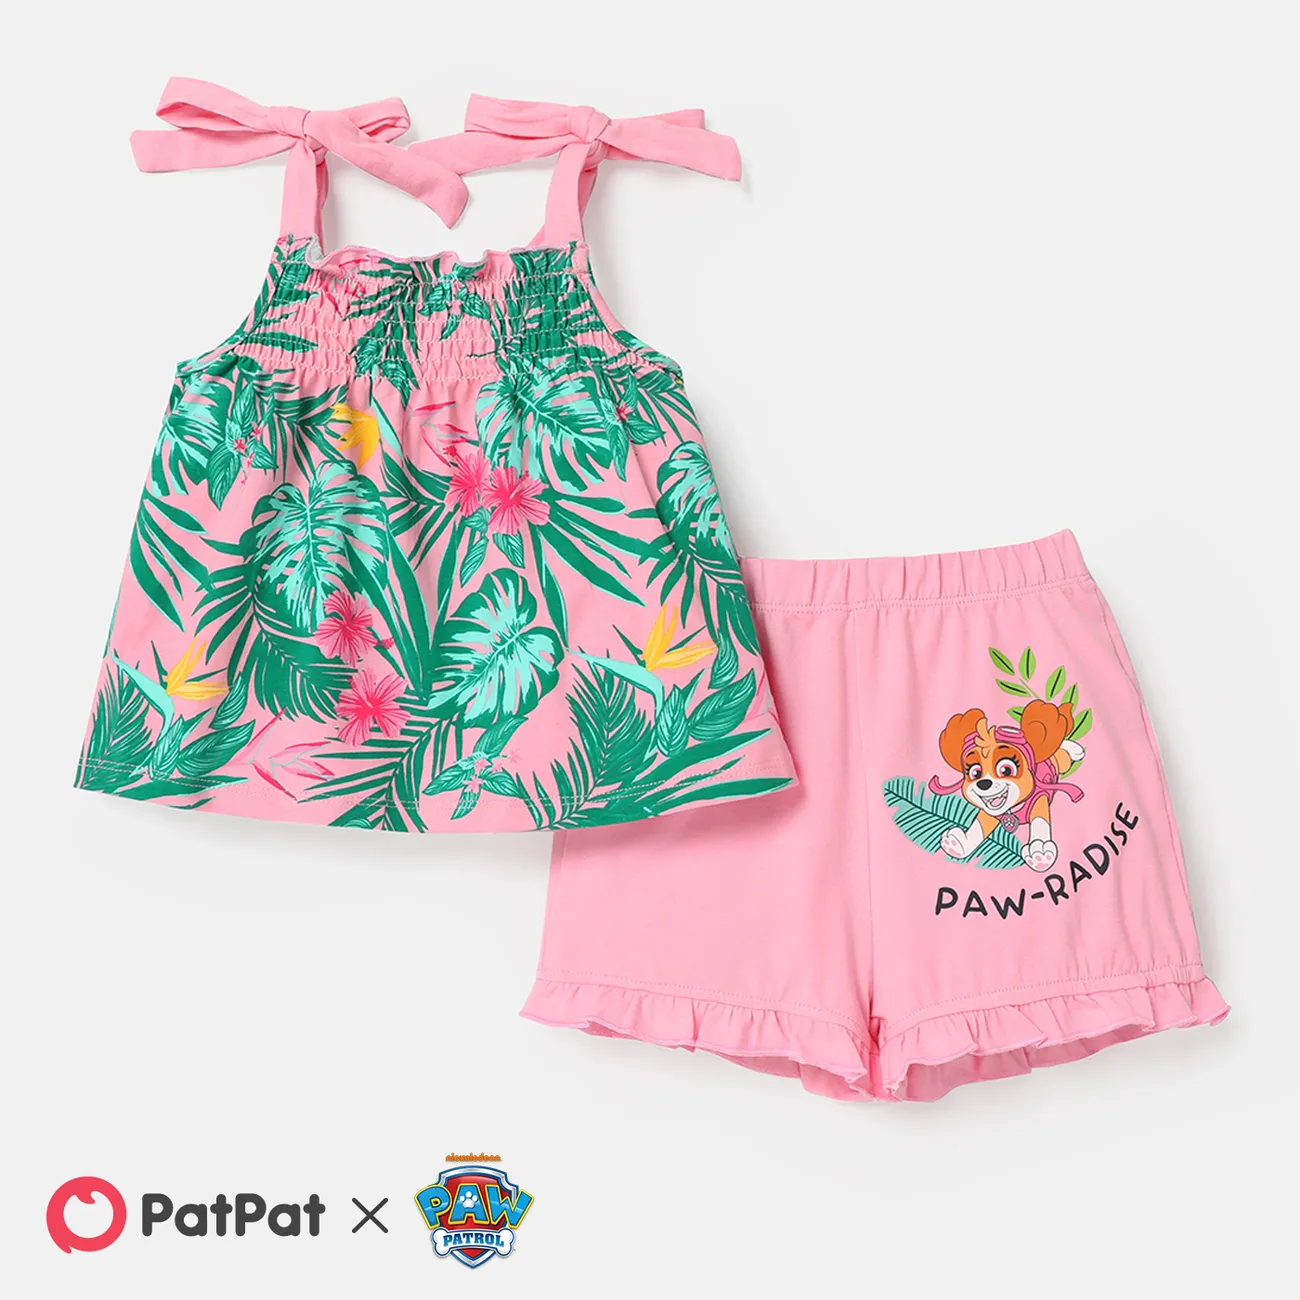 PAW Patrol Toddler Girl 2pcs Cotton Floral Print Smocked Camisole and Shorts Set  big image 1